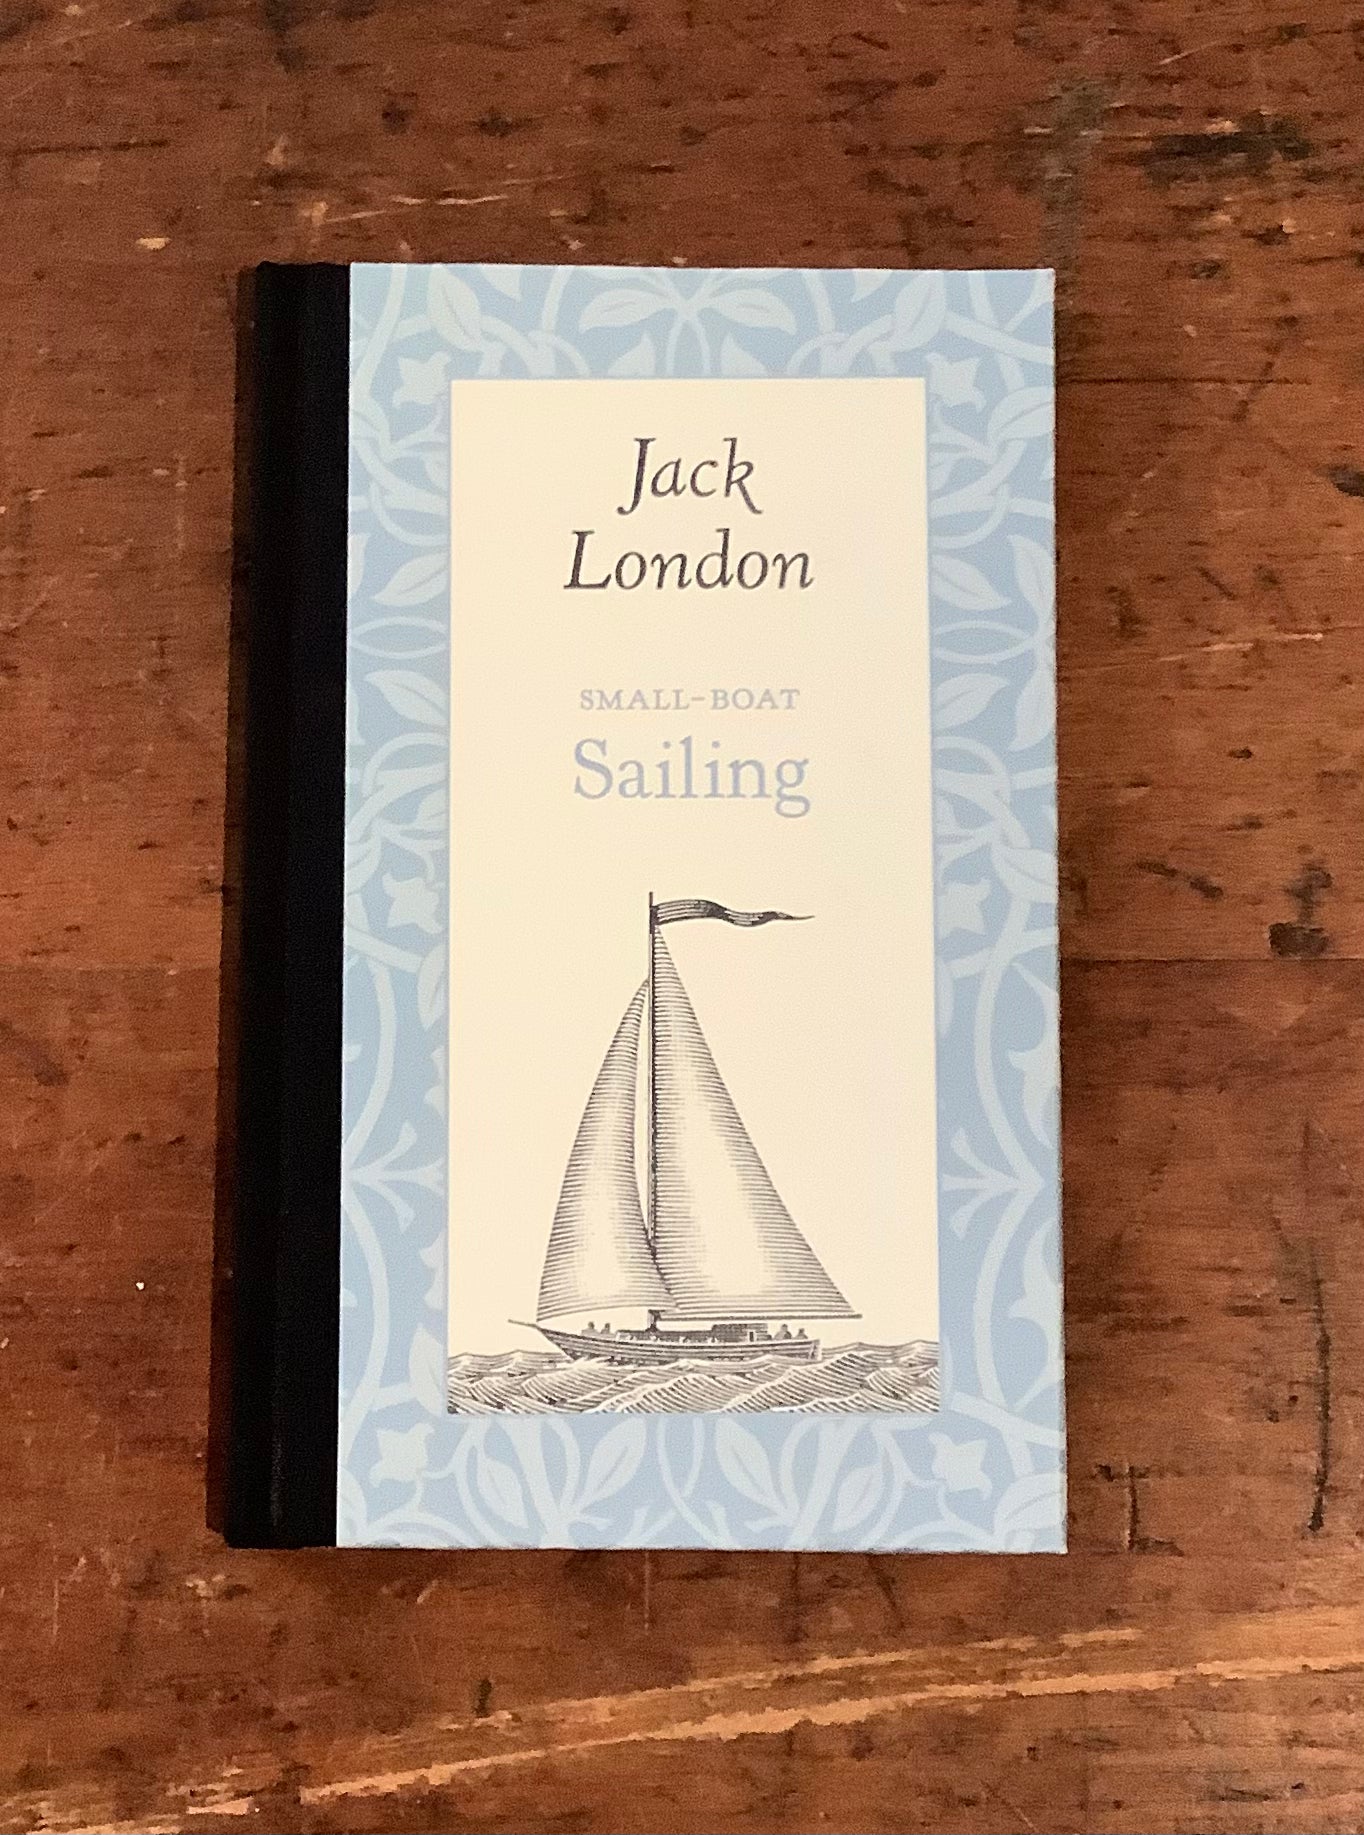 Small-Boat Sailing by Jack London